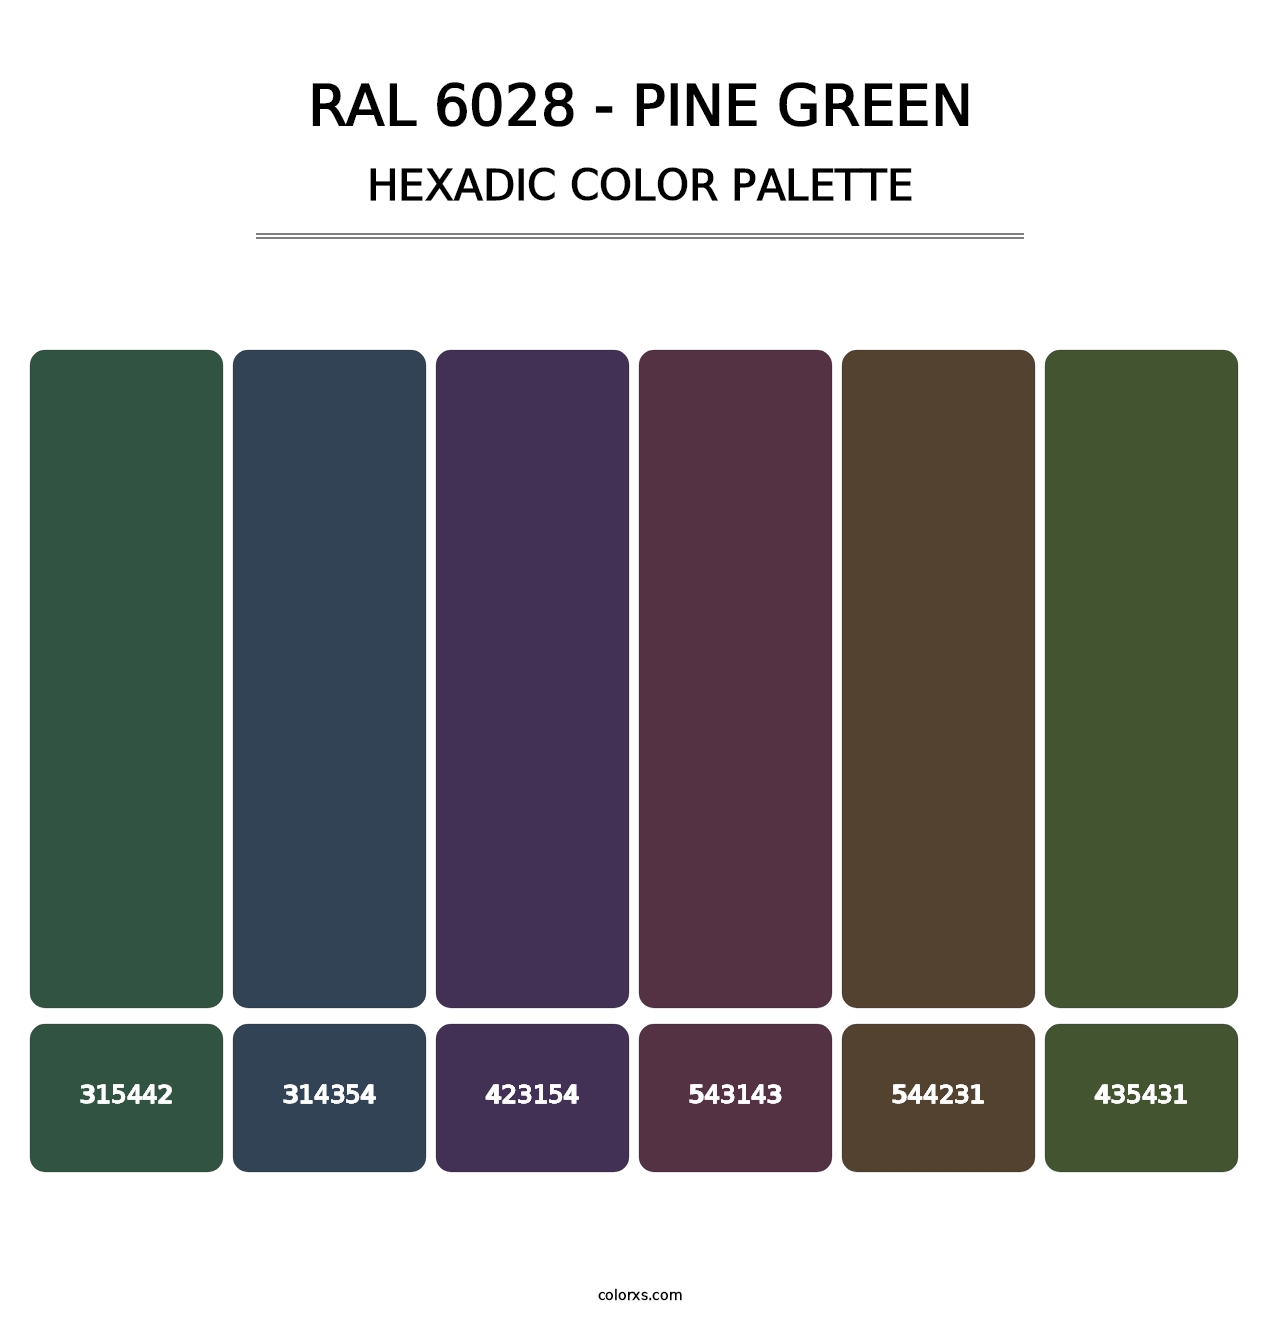 RAL 6028 - Pine Green - Hexadic Color Palette